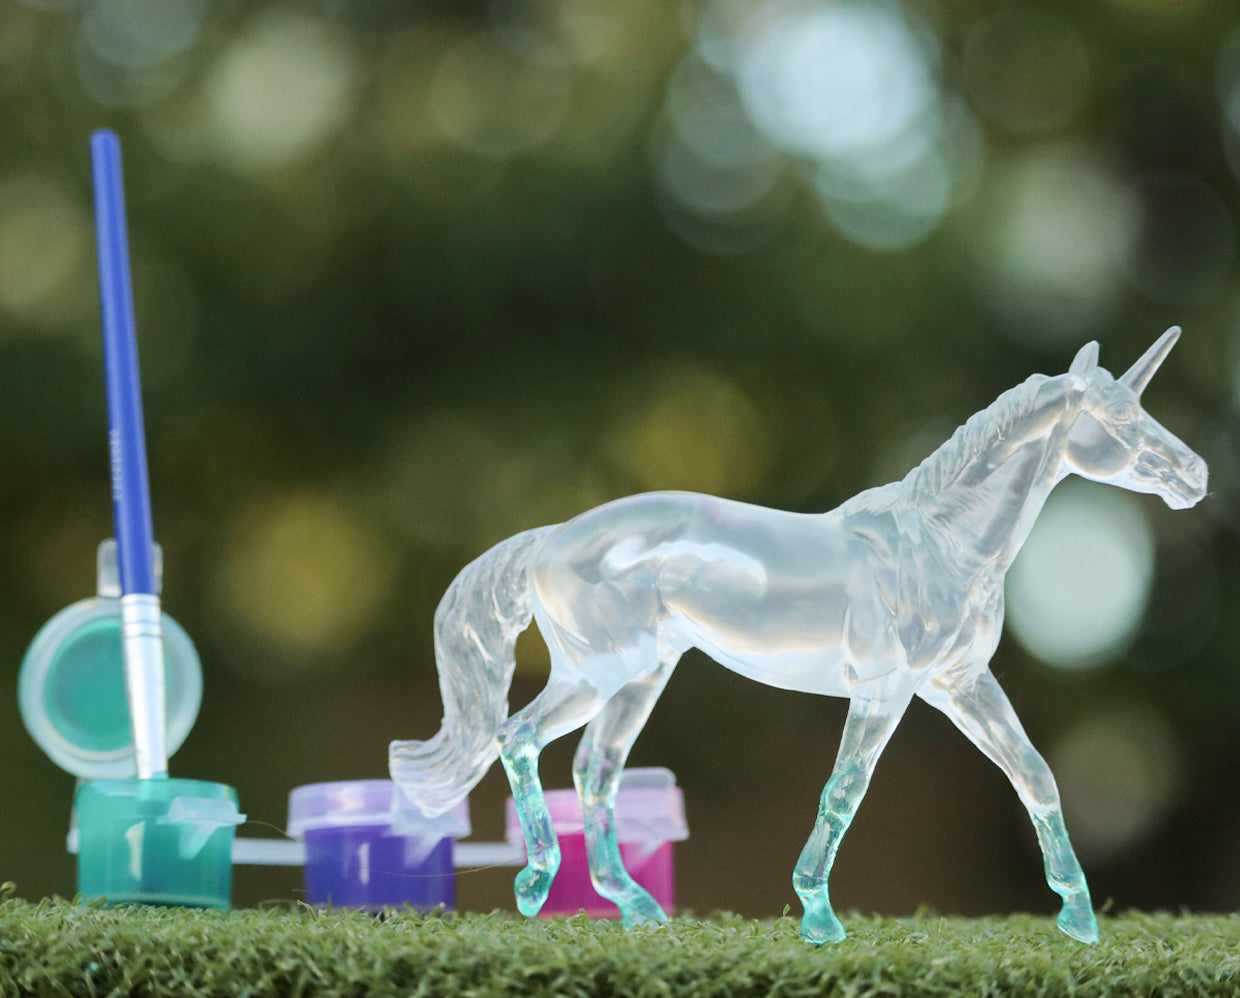 Breyer Suncatcher Unicorn Paint & Play Kit